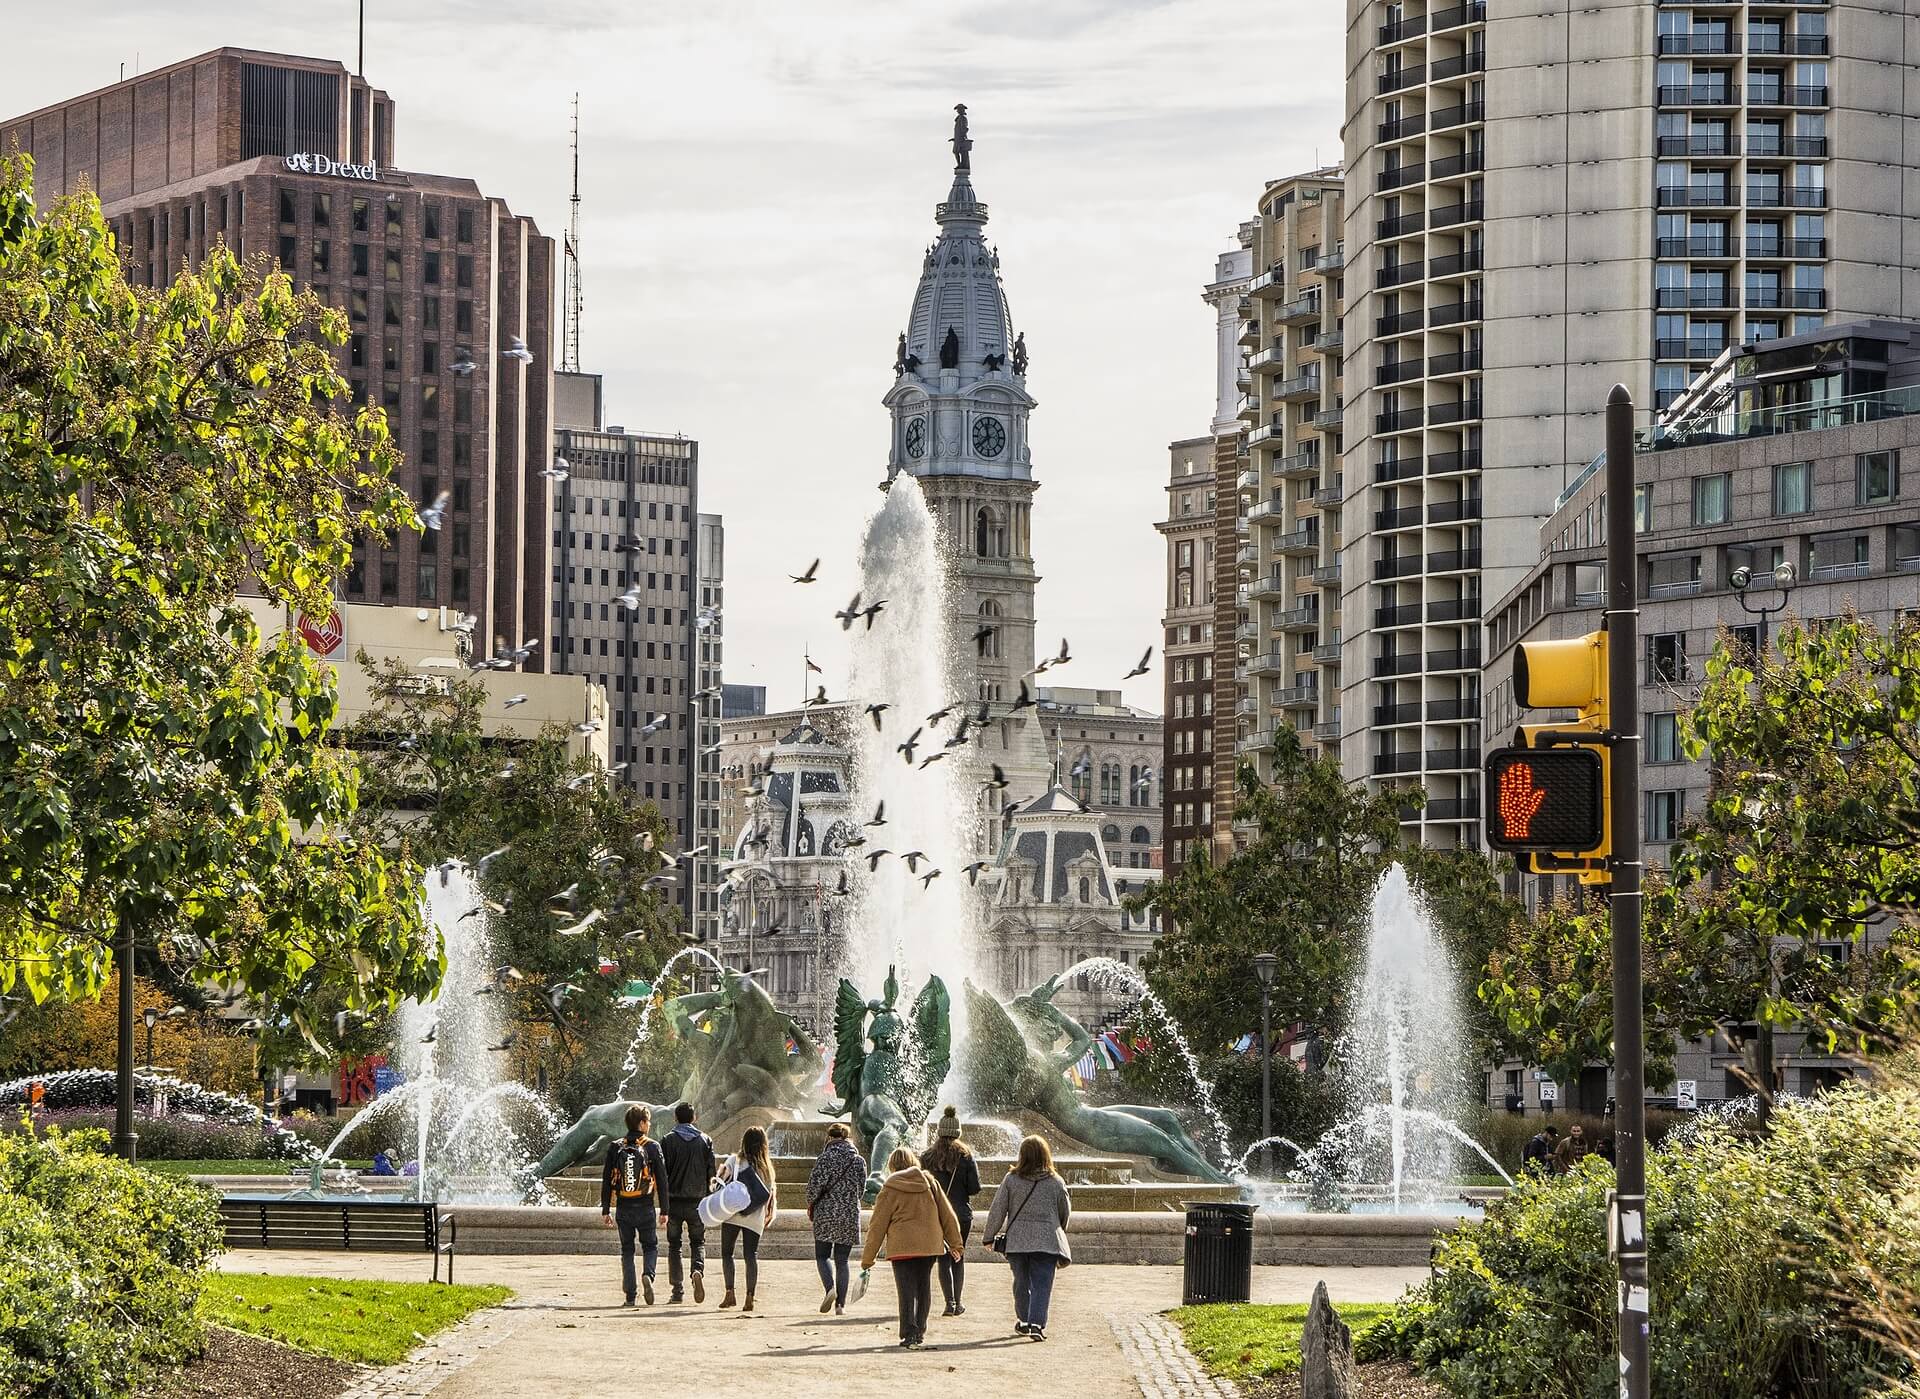 Philadelphia, Image by Bruce Emmerling from Pixabay